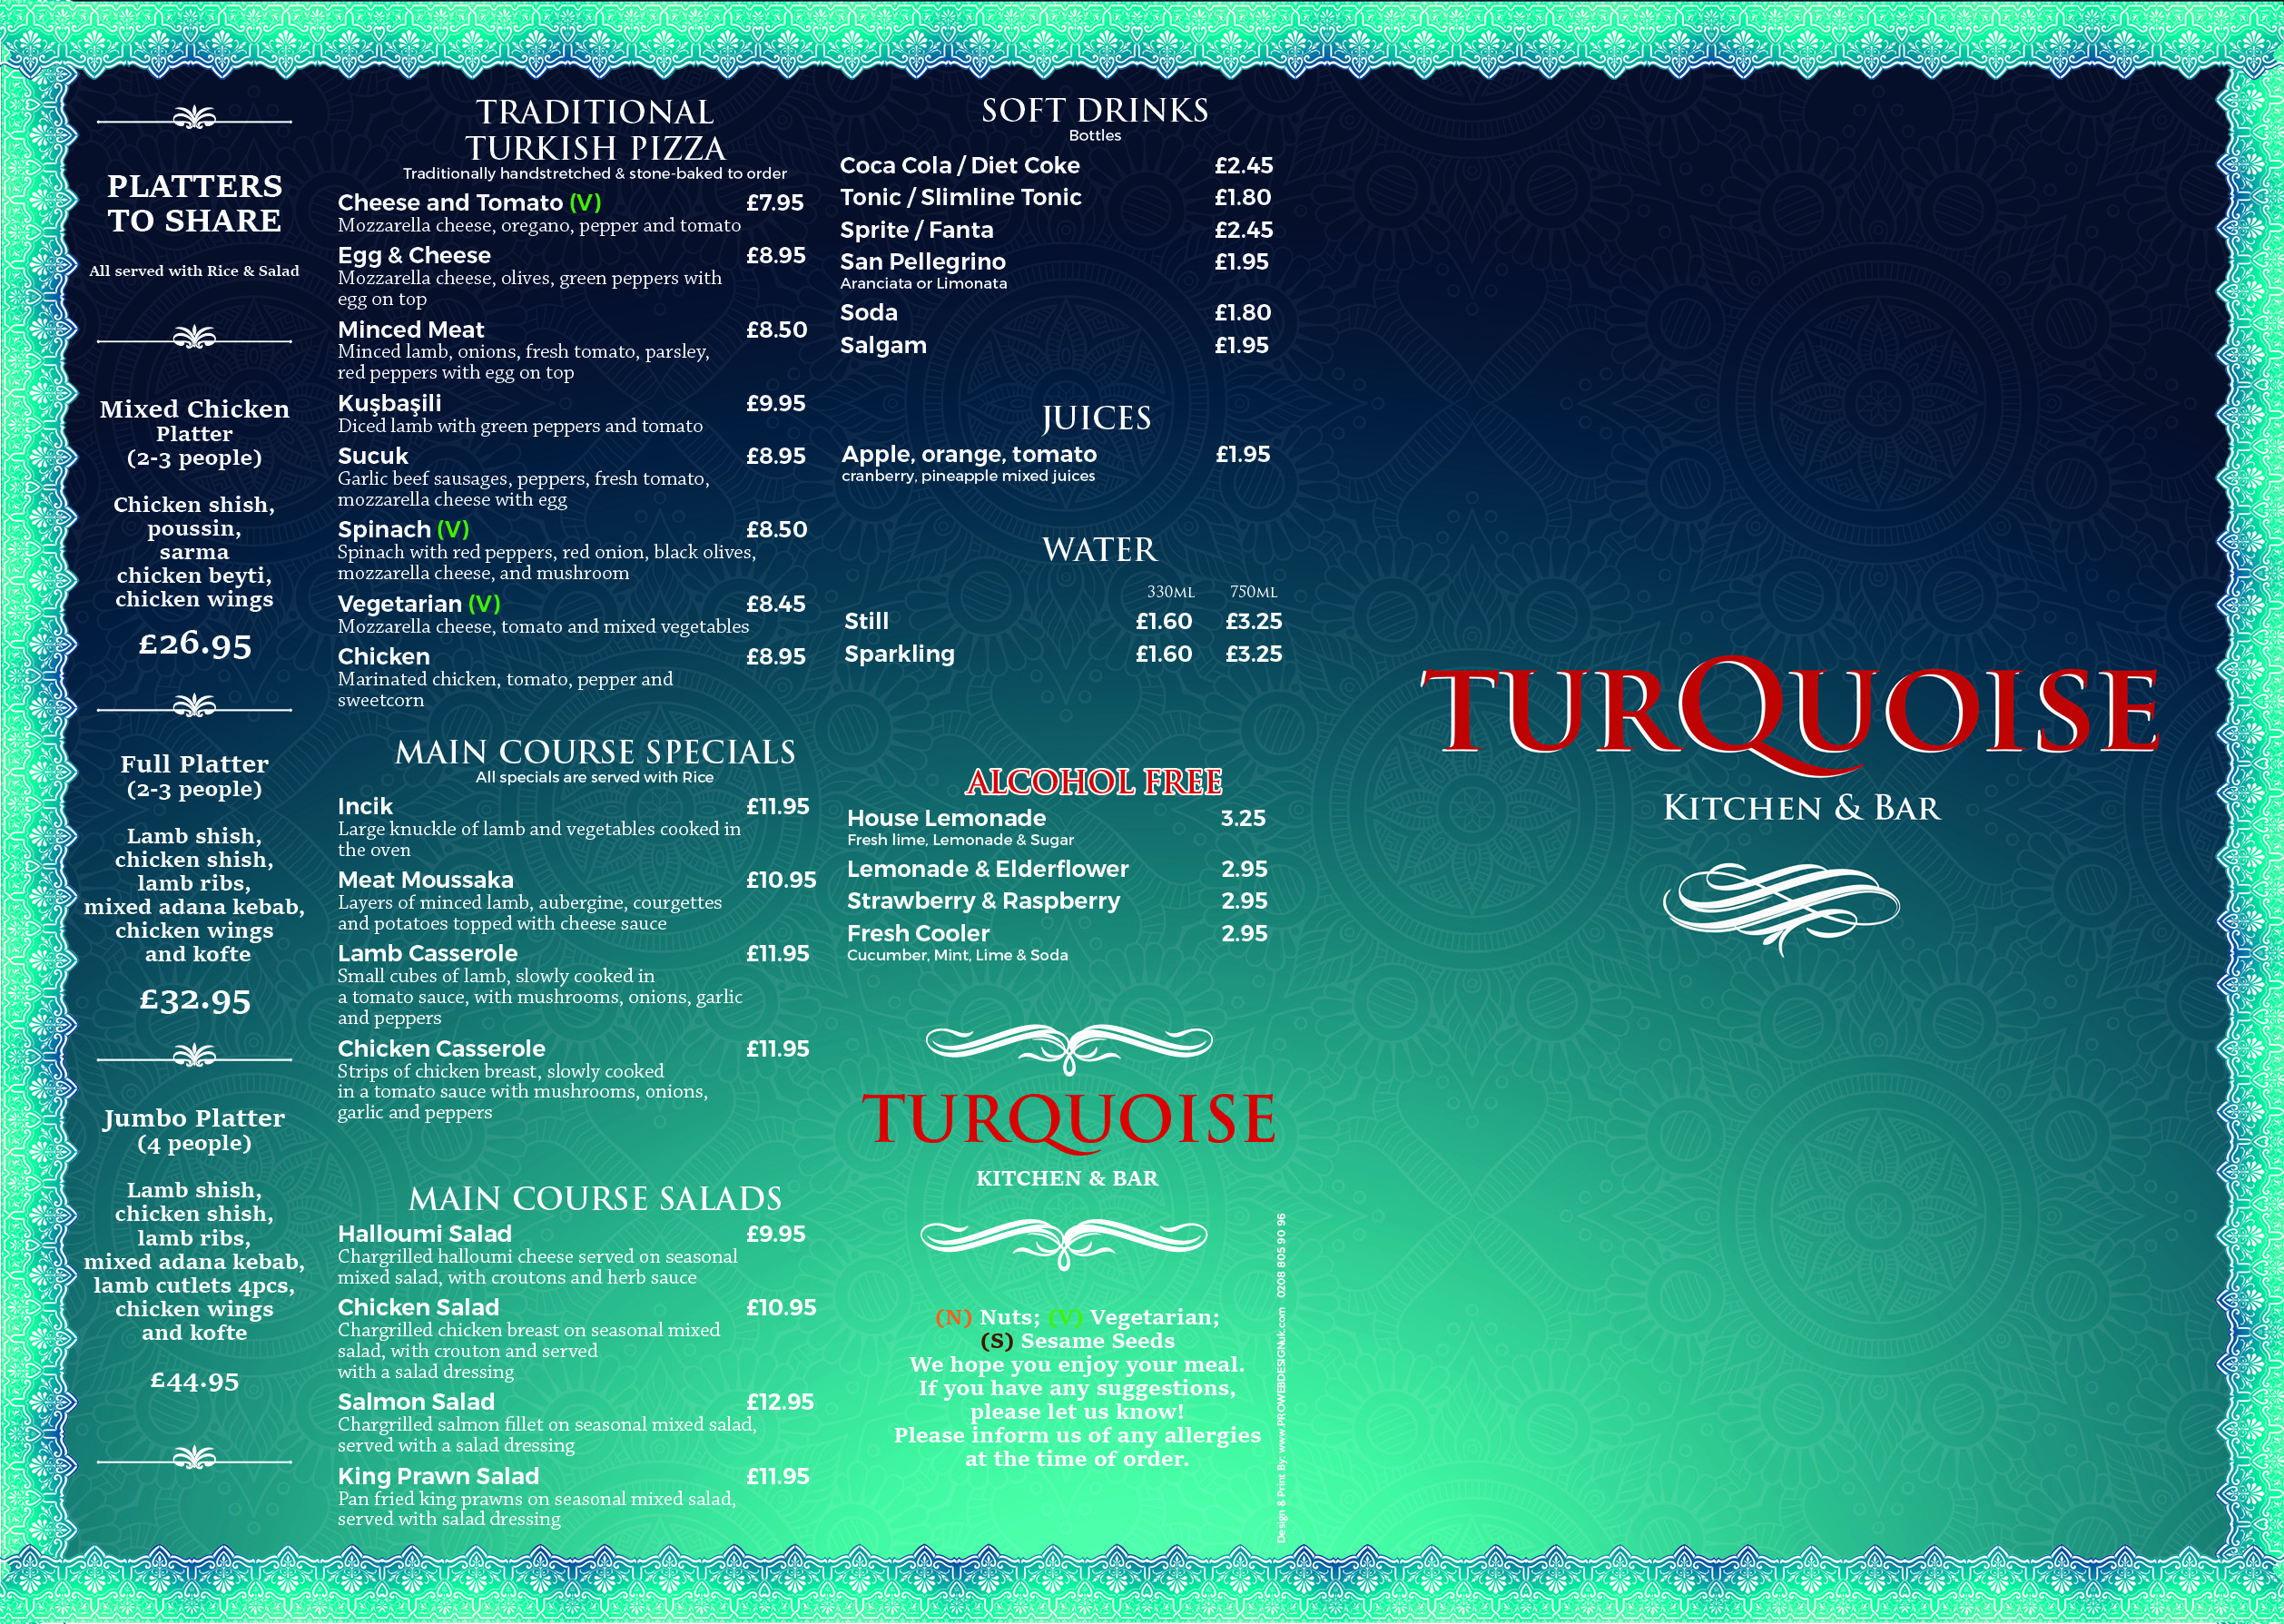 turquoise kitchen and bar menu